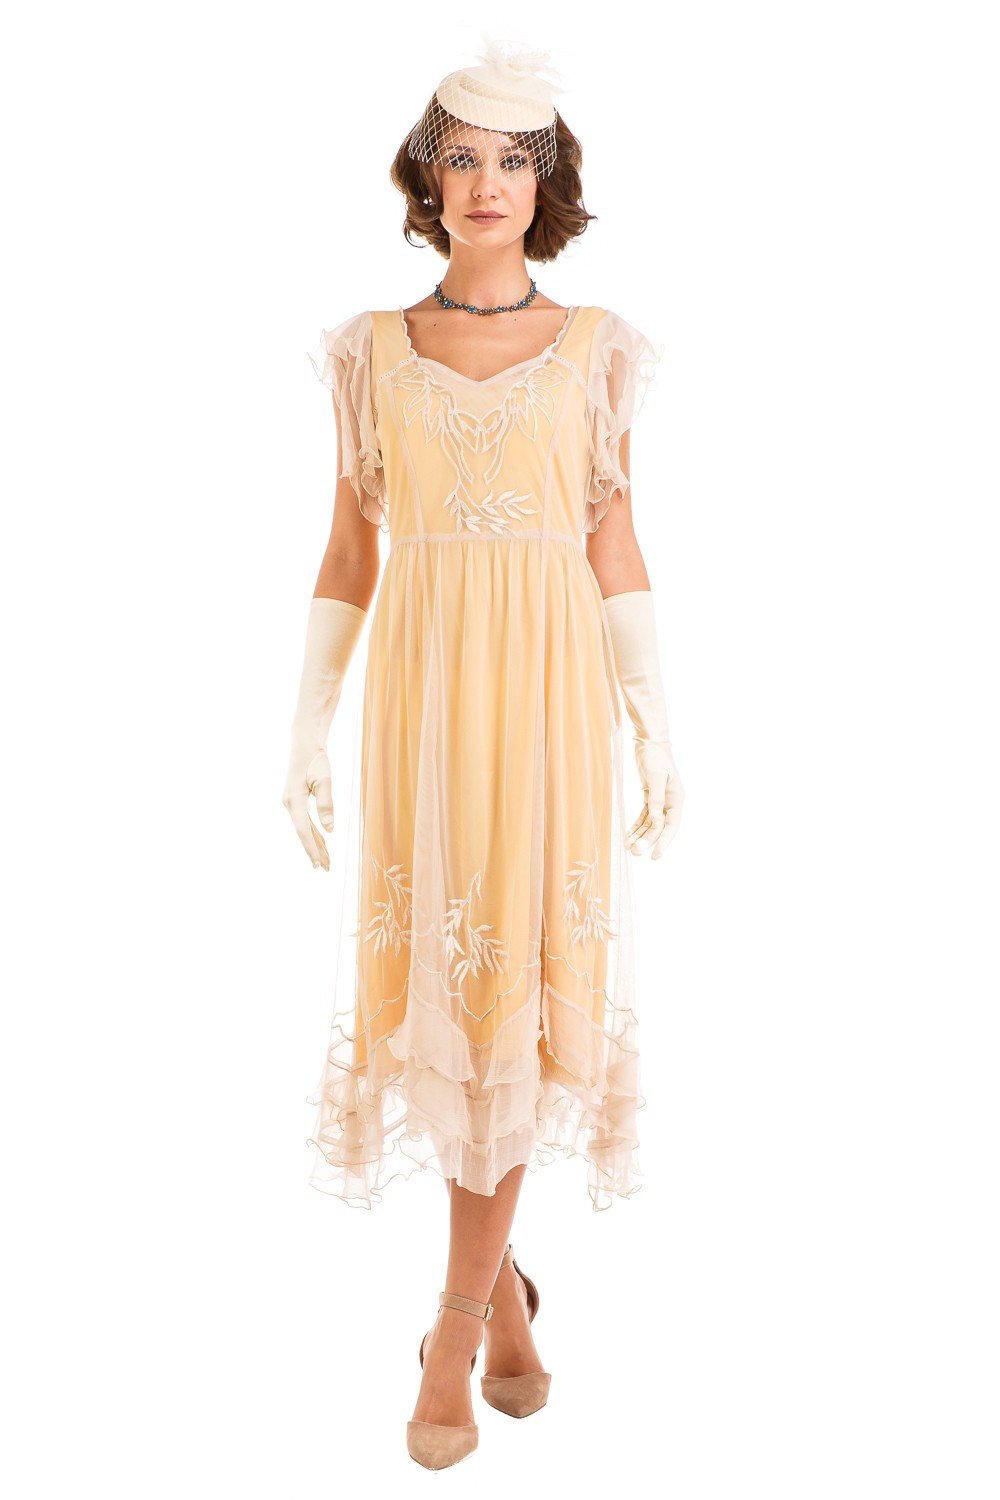 Olivia 1920s Flapper Style Dress in Lemon by Nataya